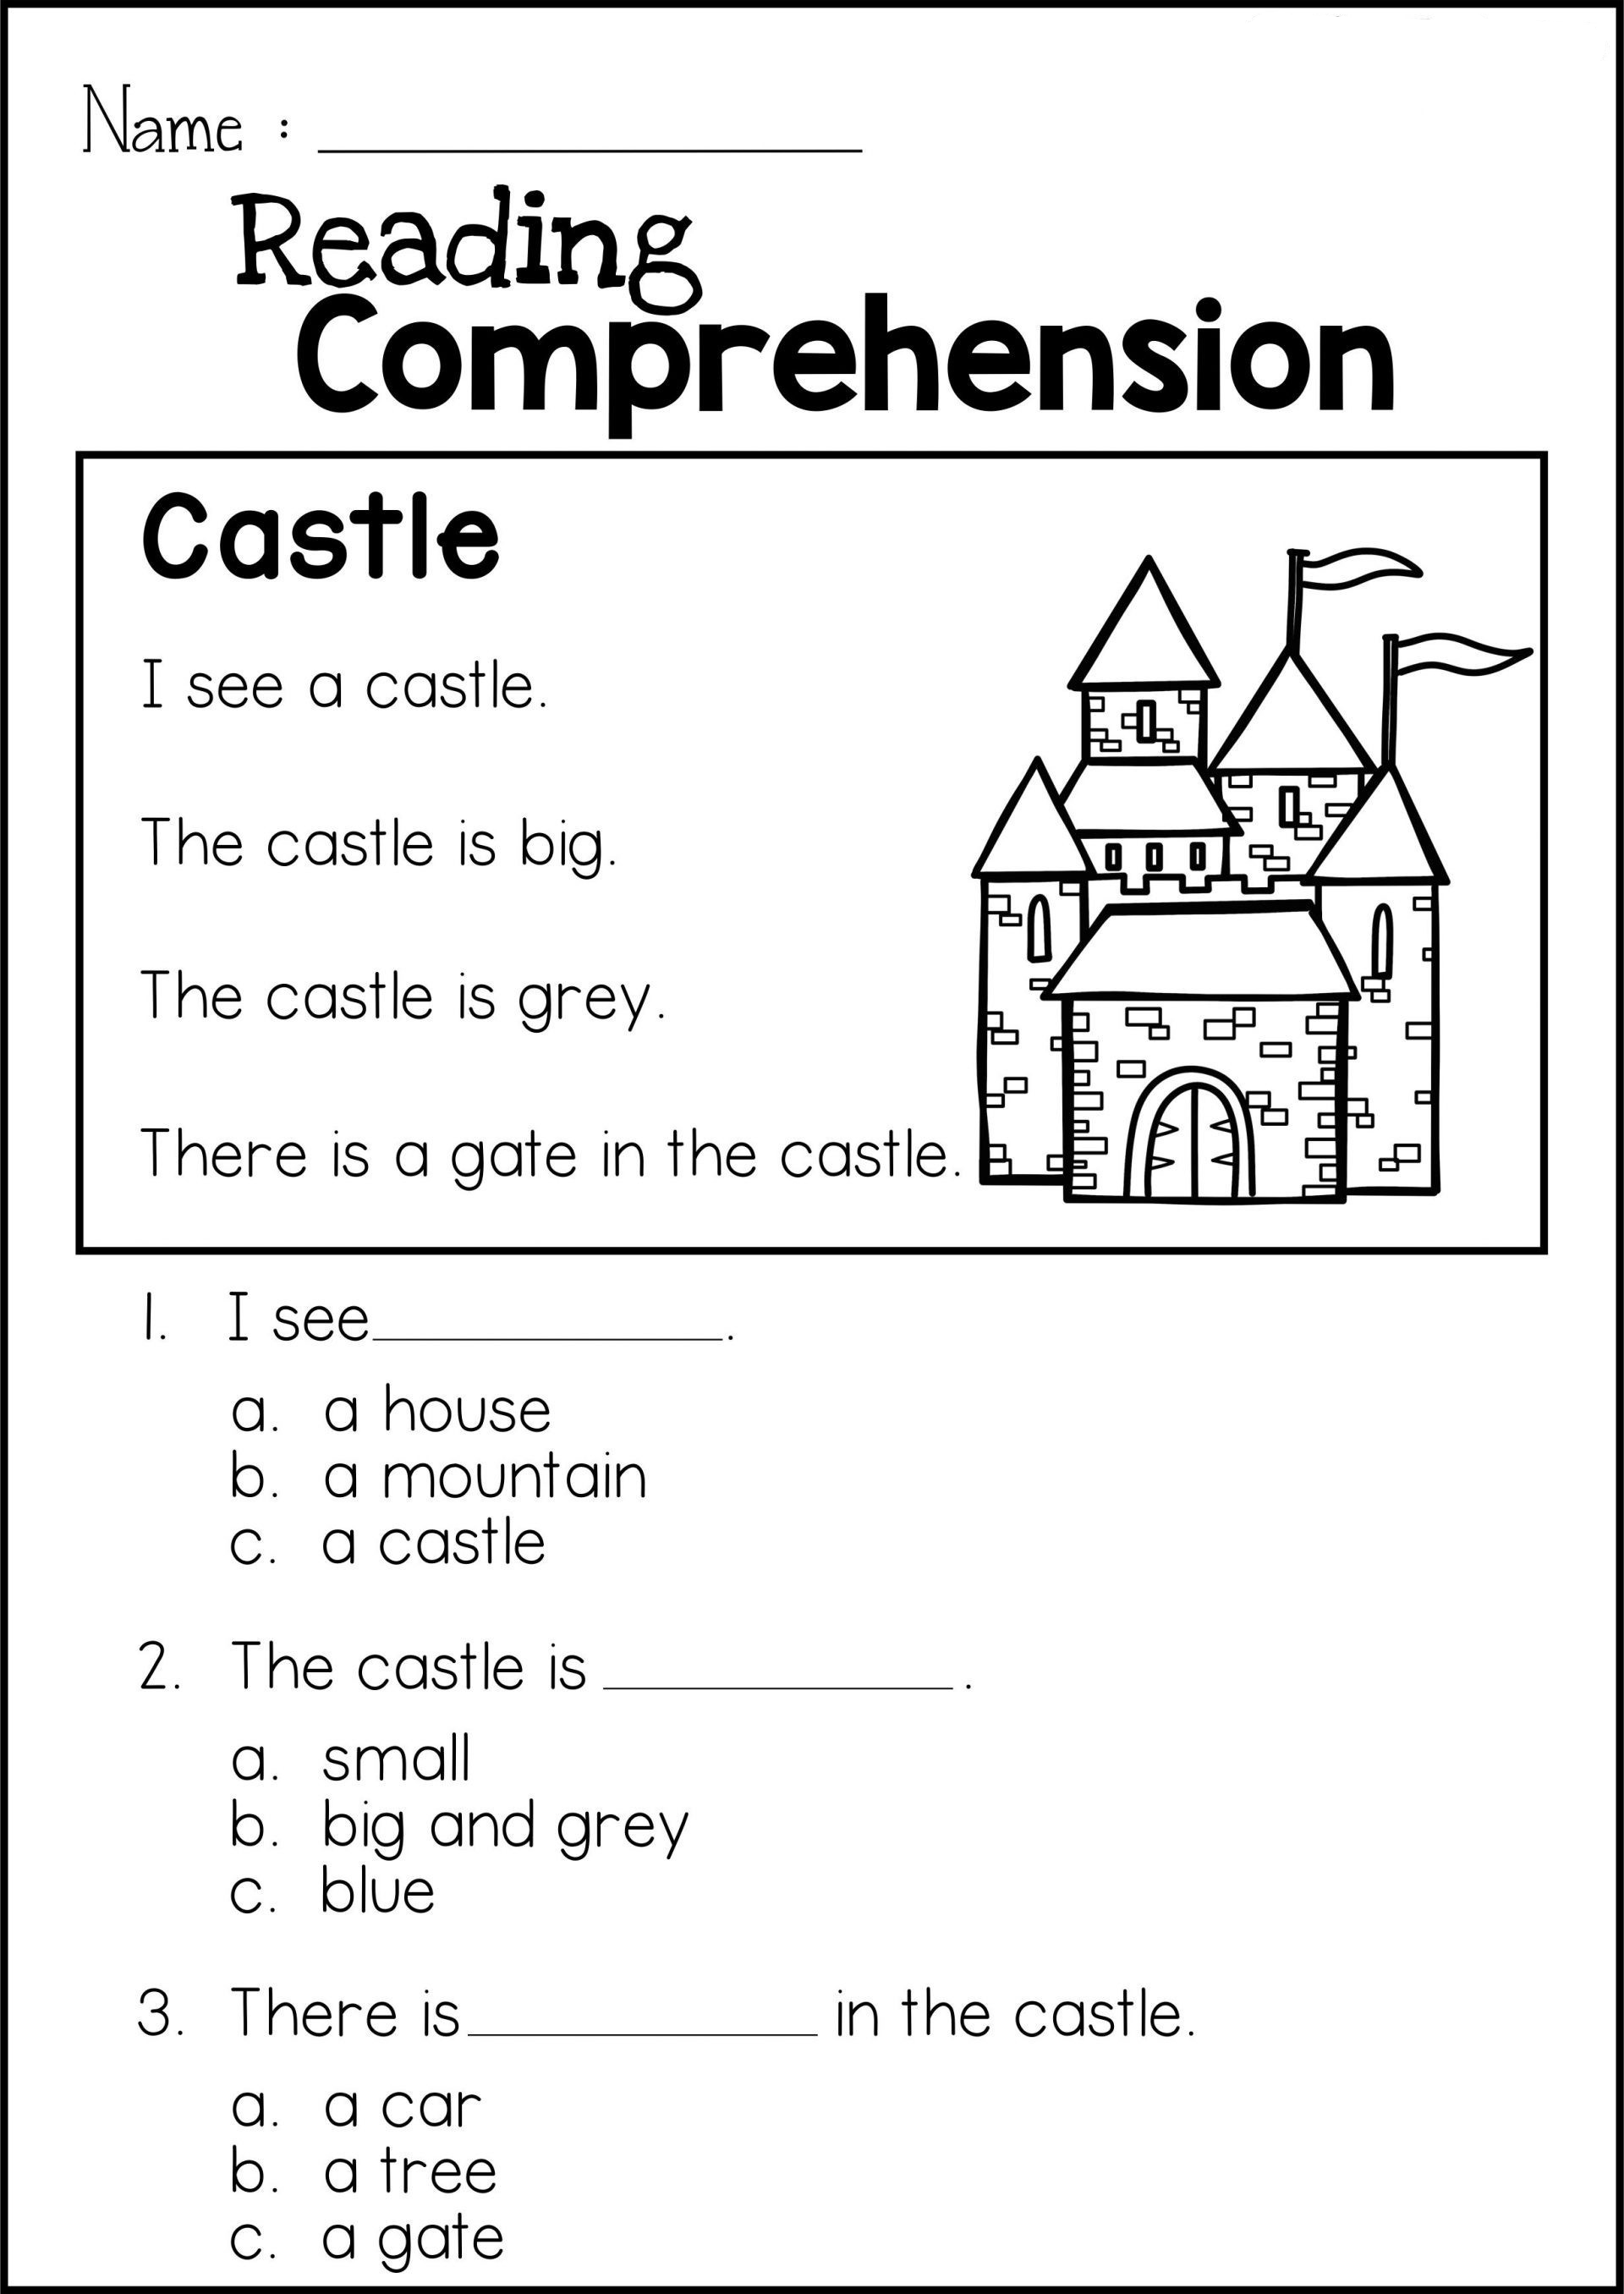 june-reading-comprehension-passages-for-kindergarten-and-first-grade